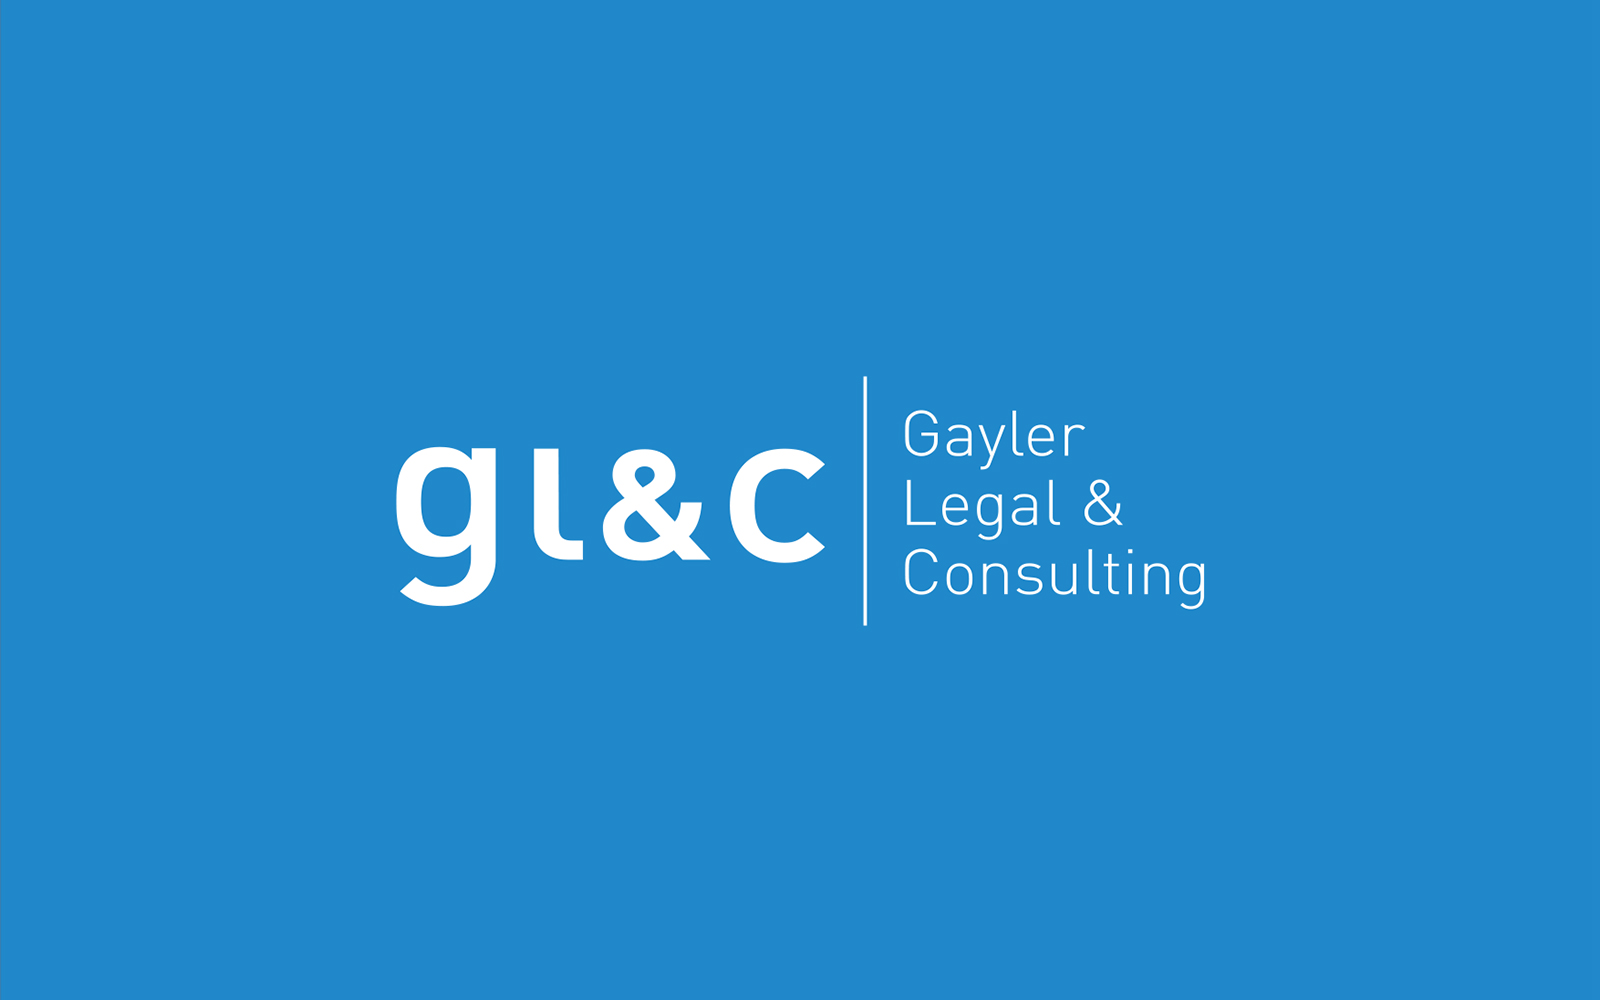 GLC Gayler Partner Logo blue